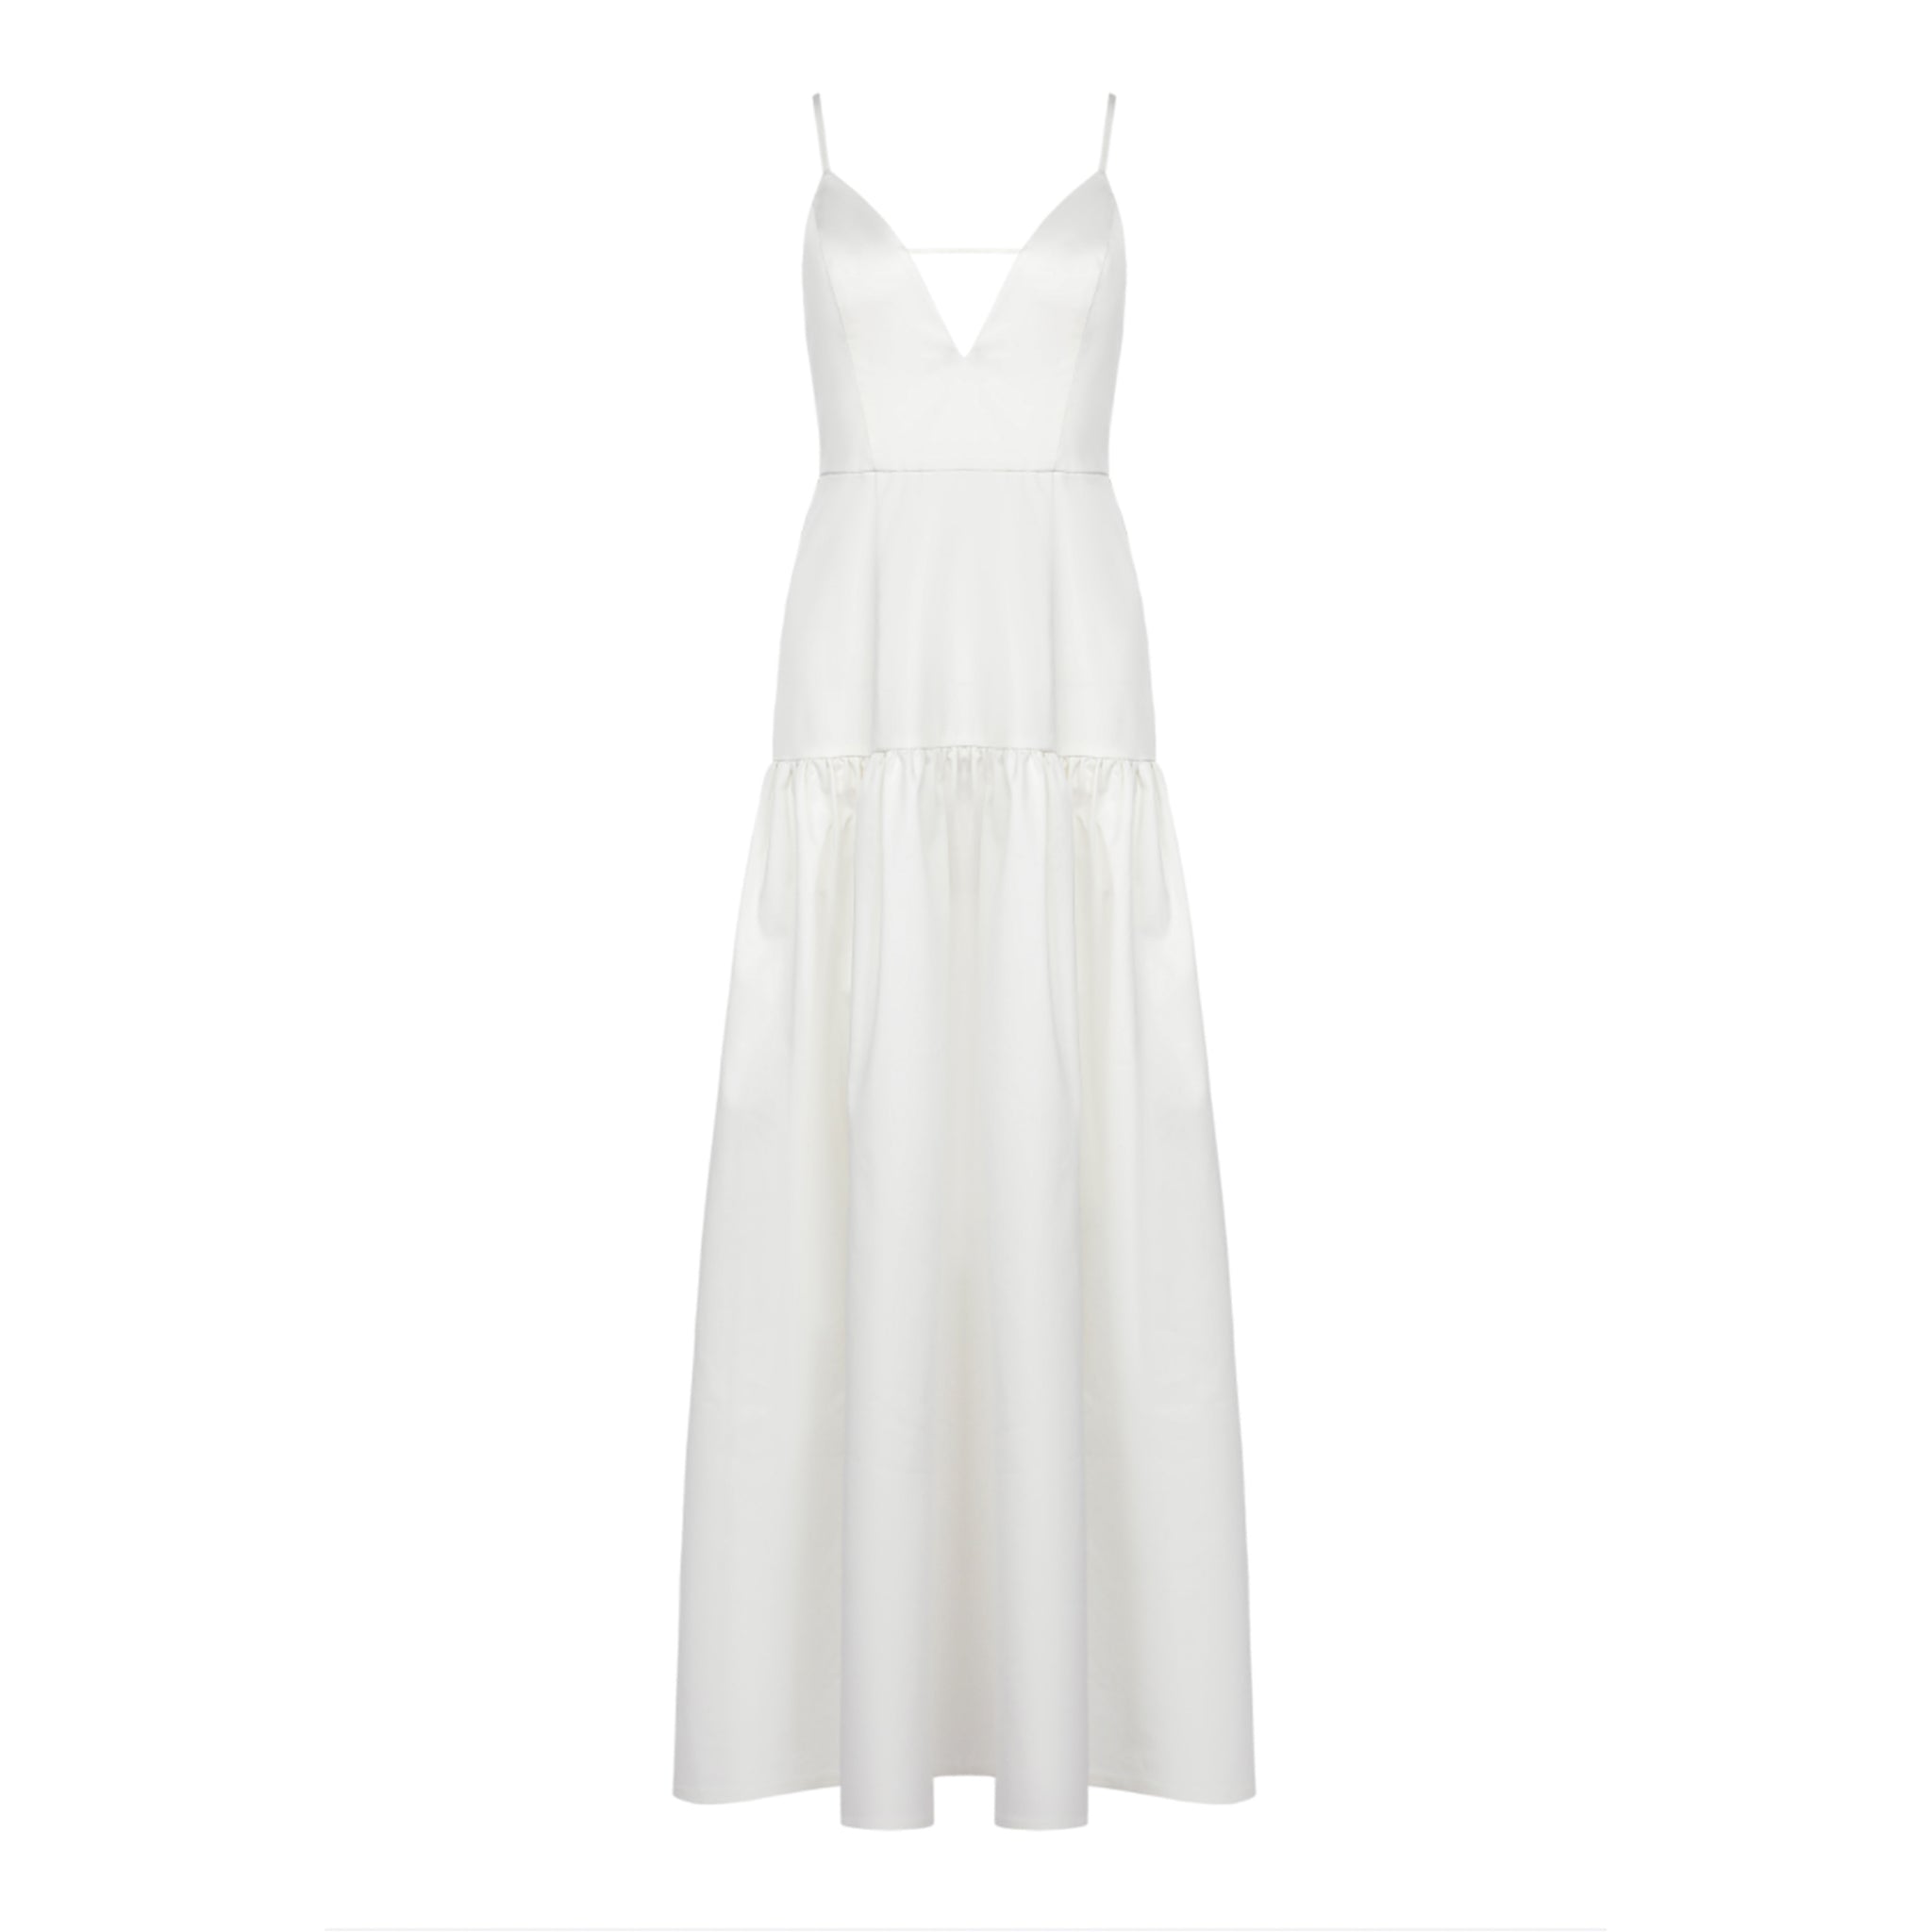 Blair Dress - White